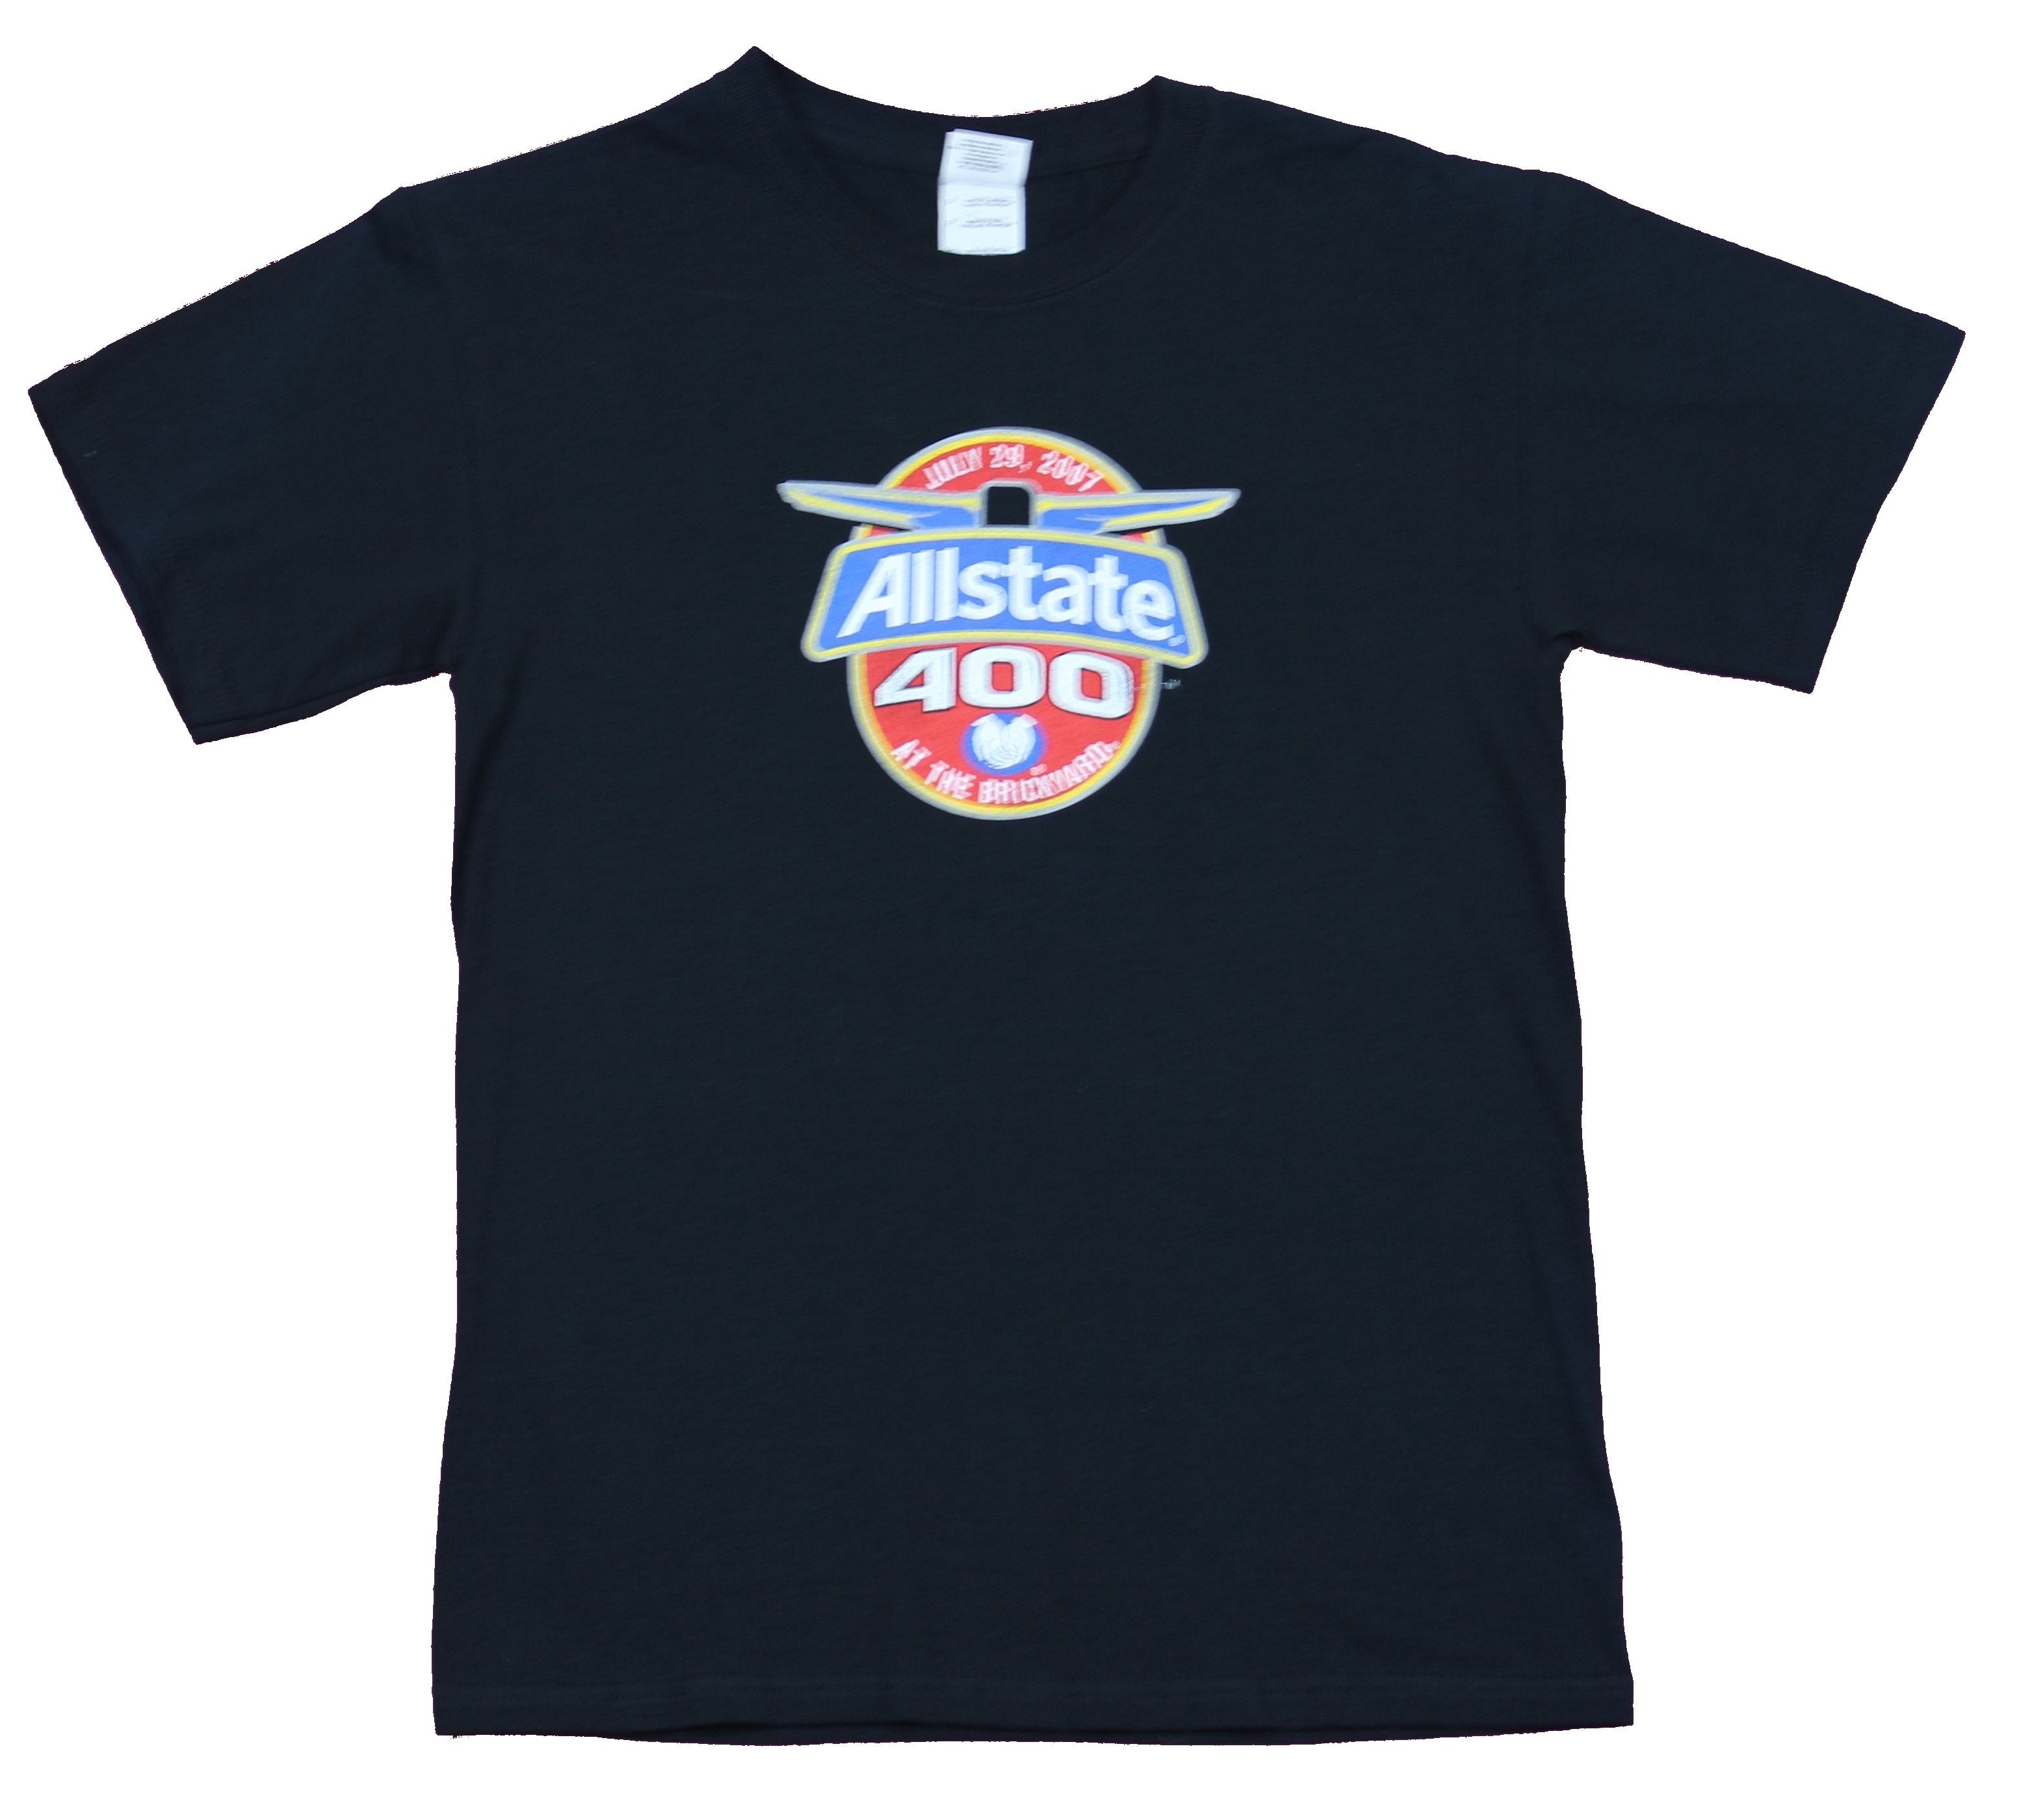 Allstate 400 Mens T-Shirt  - 2007 Brickyard Race Logo Image